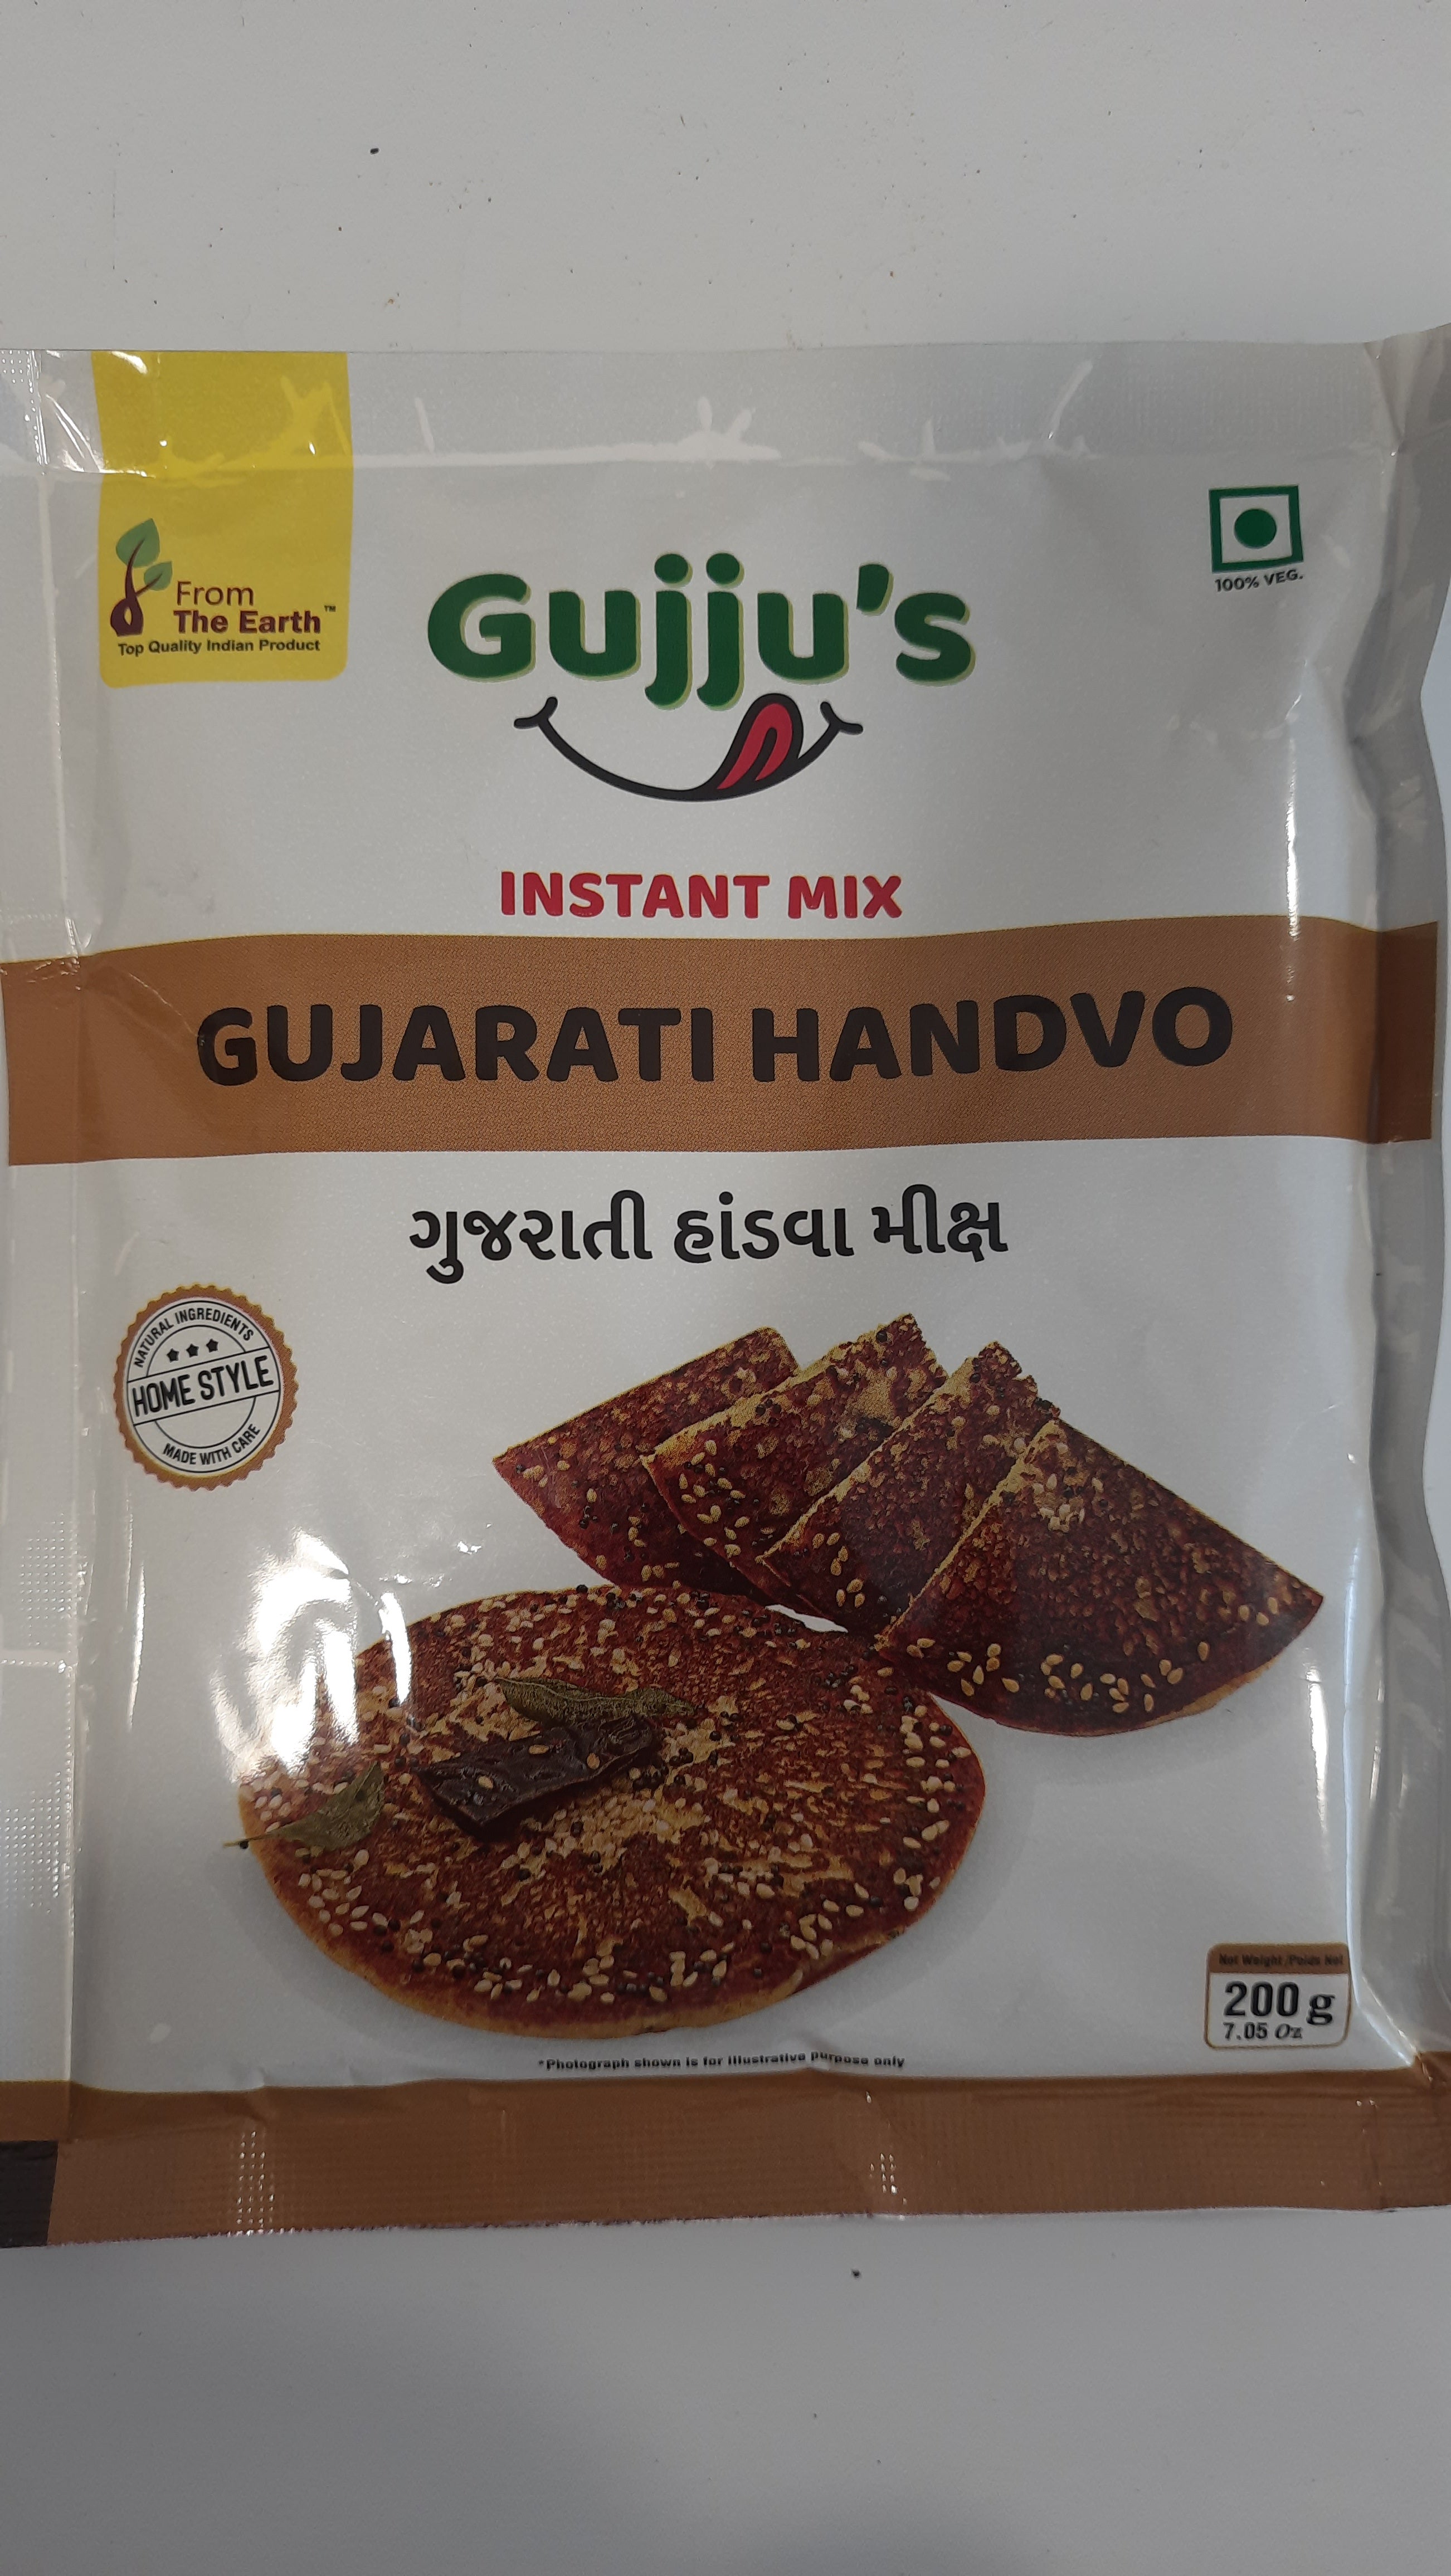 From the Earth - Instant Gujarati Handvo 200g